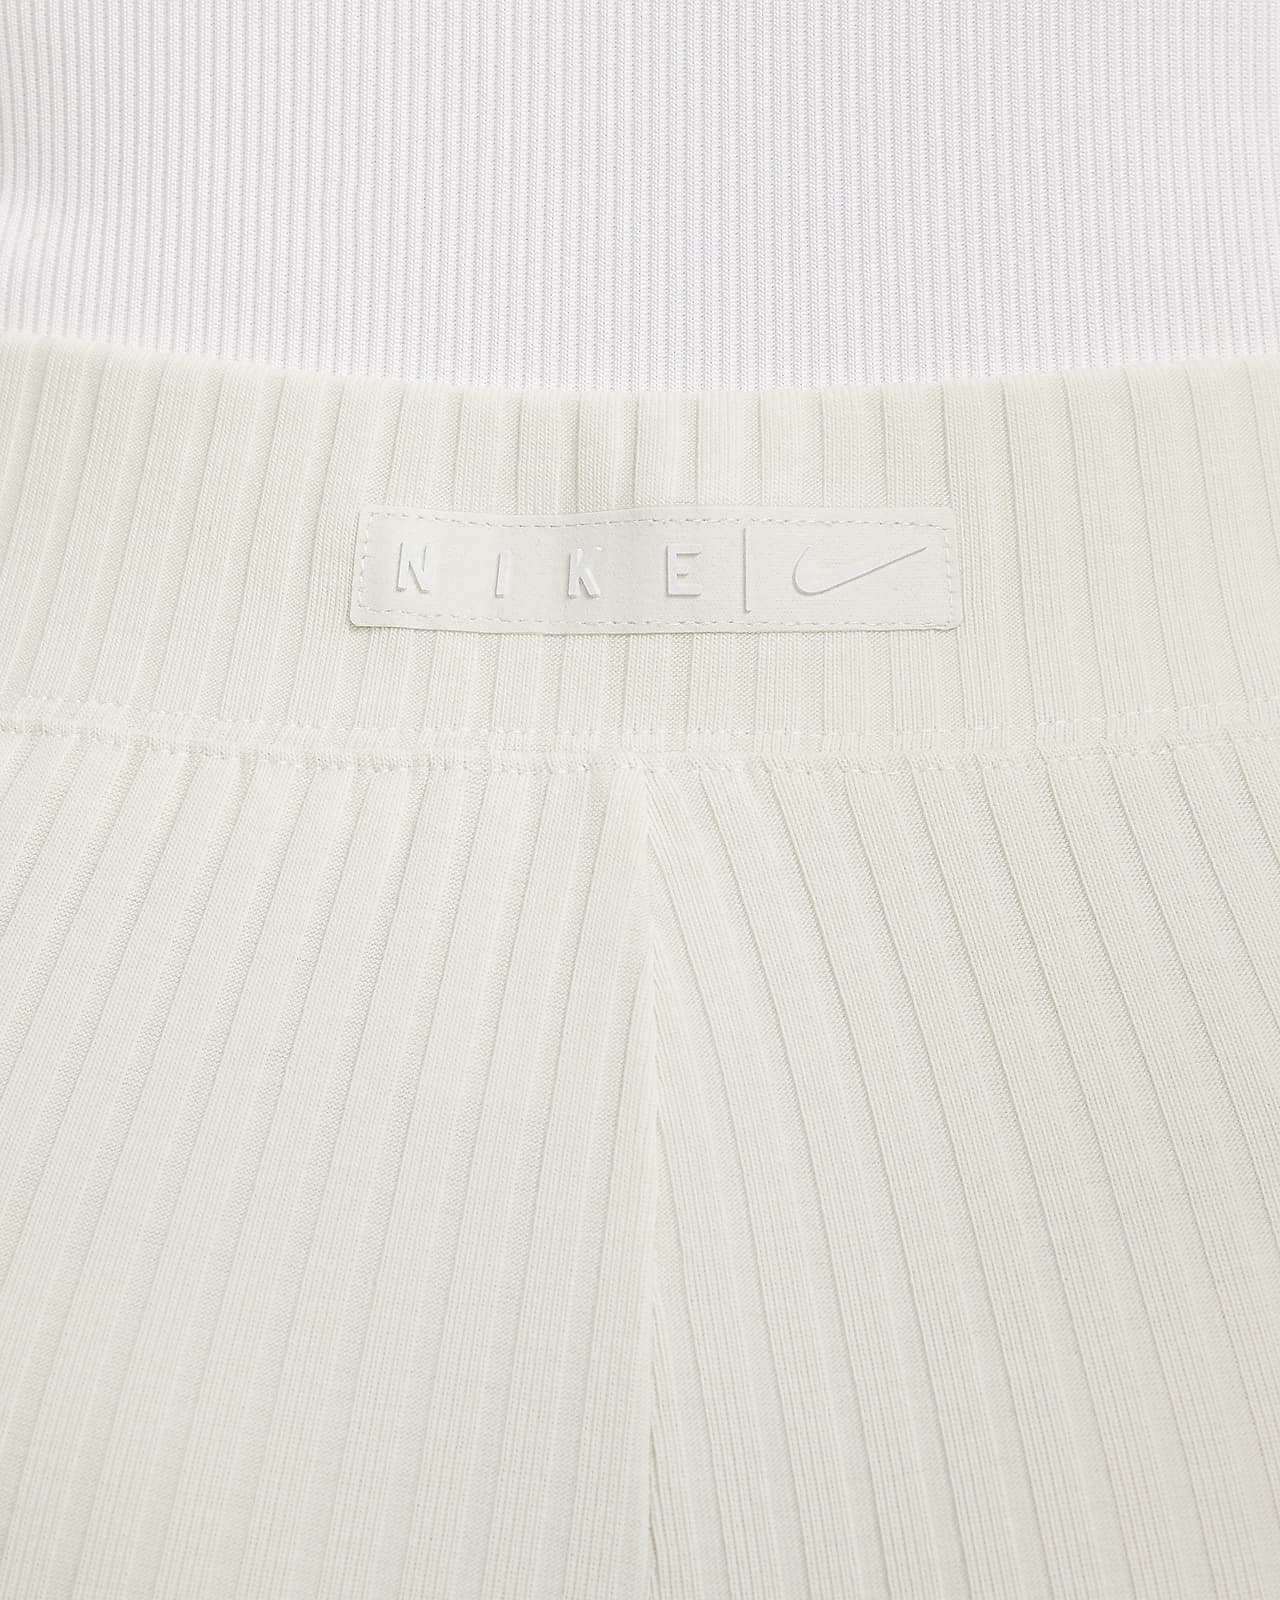 Nike Sportswear Women's High-Waisted Ribbed Jersey Flared Pants